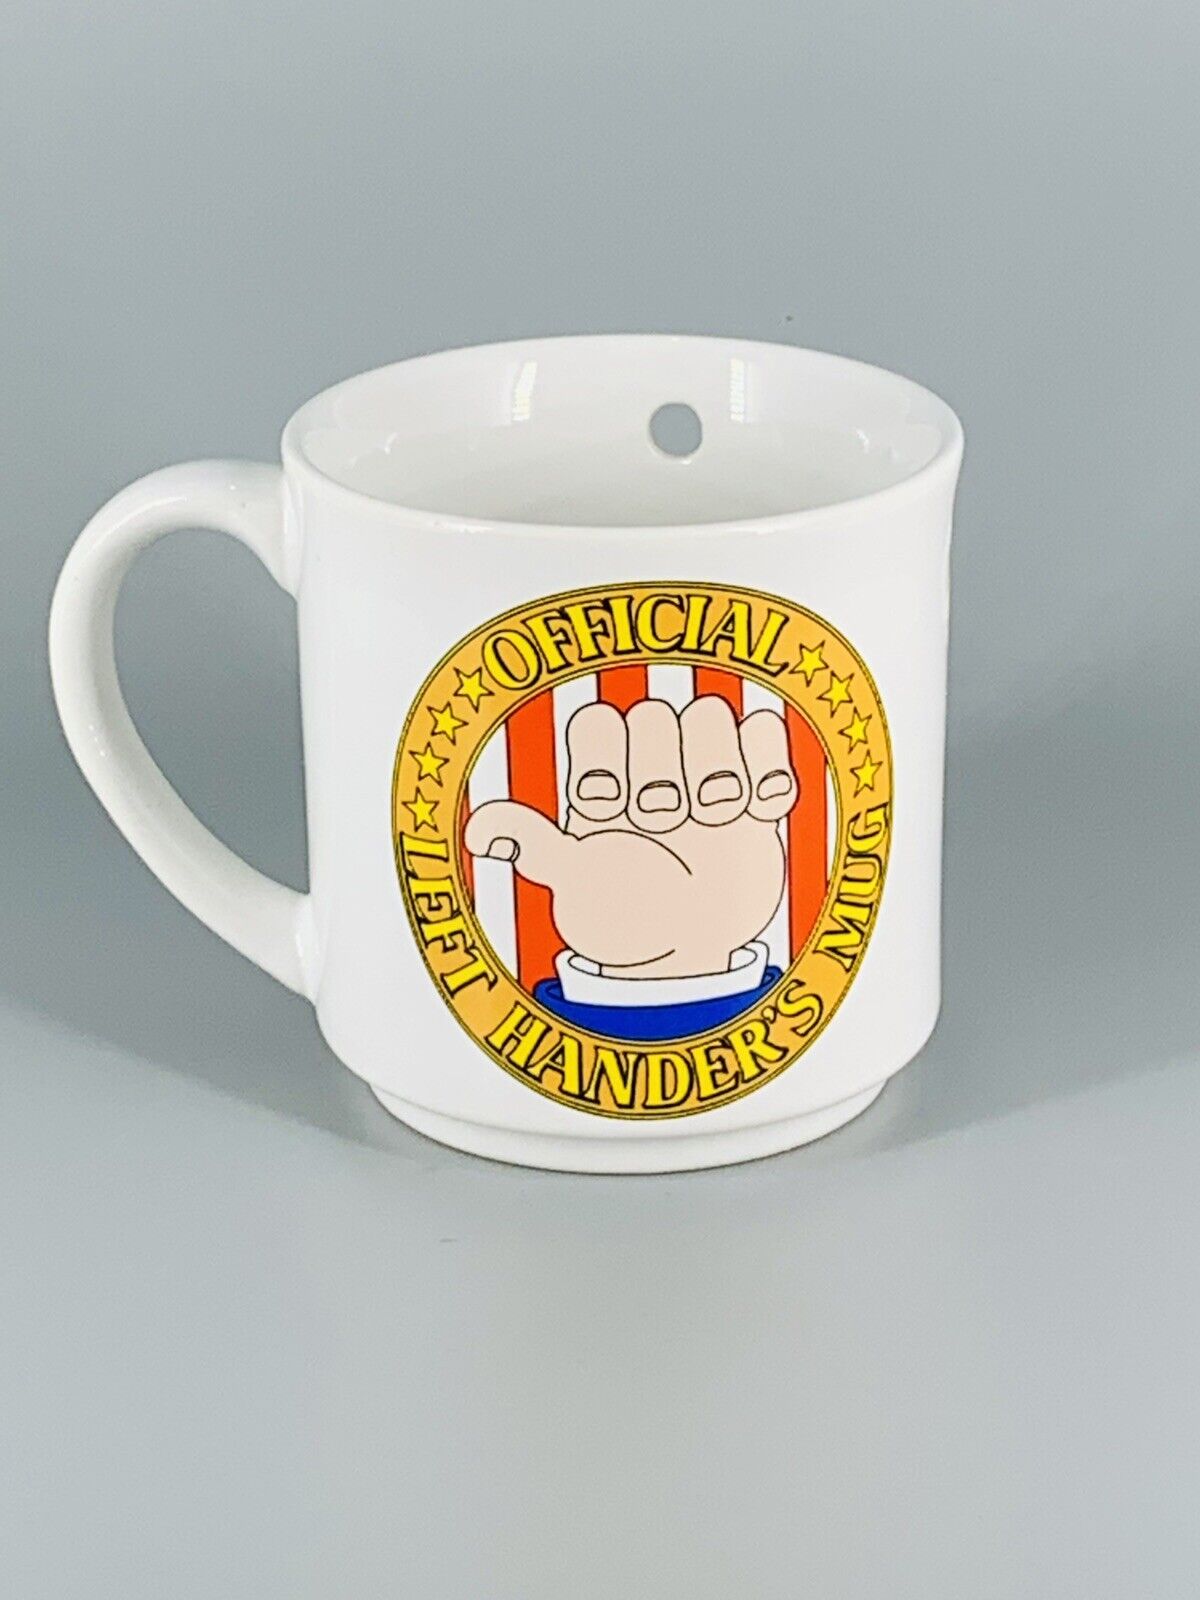 Official Left Handers Coffee Cup Mug 8oz Ceramic Novelty